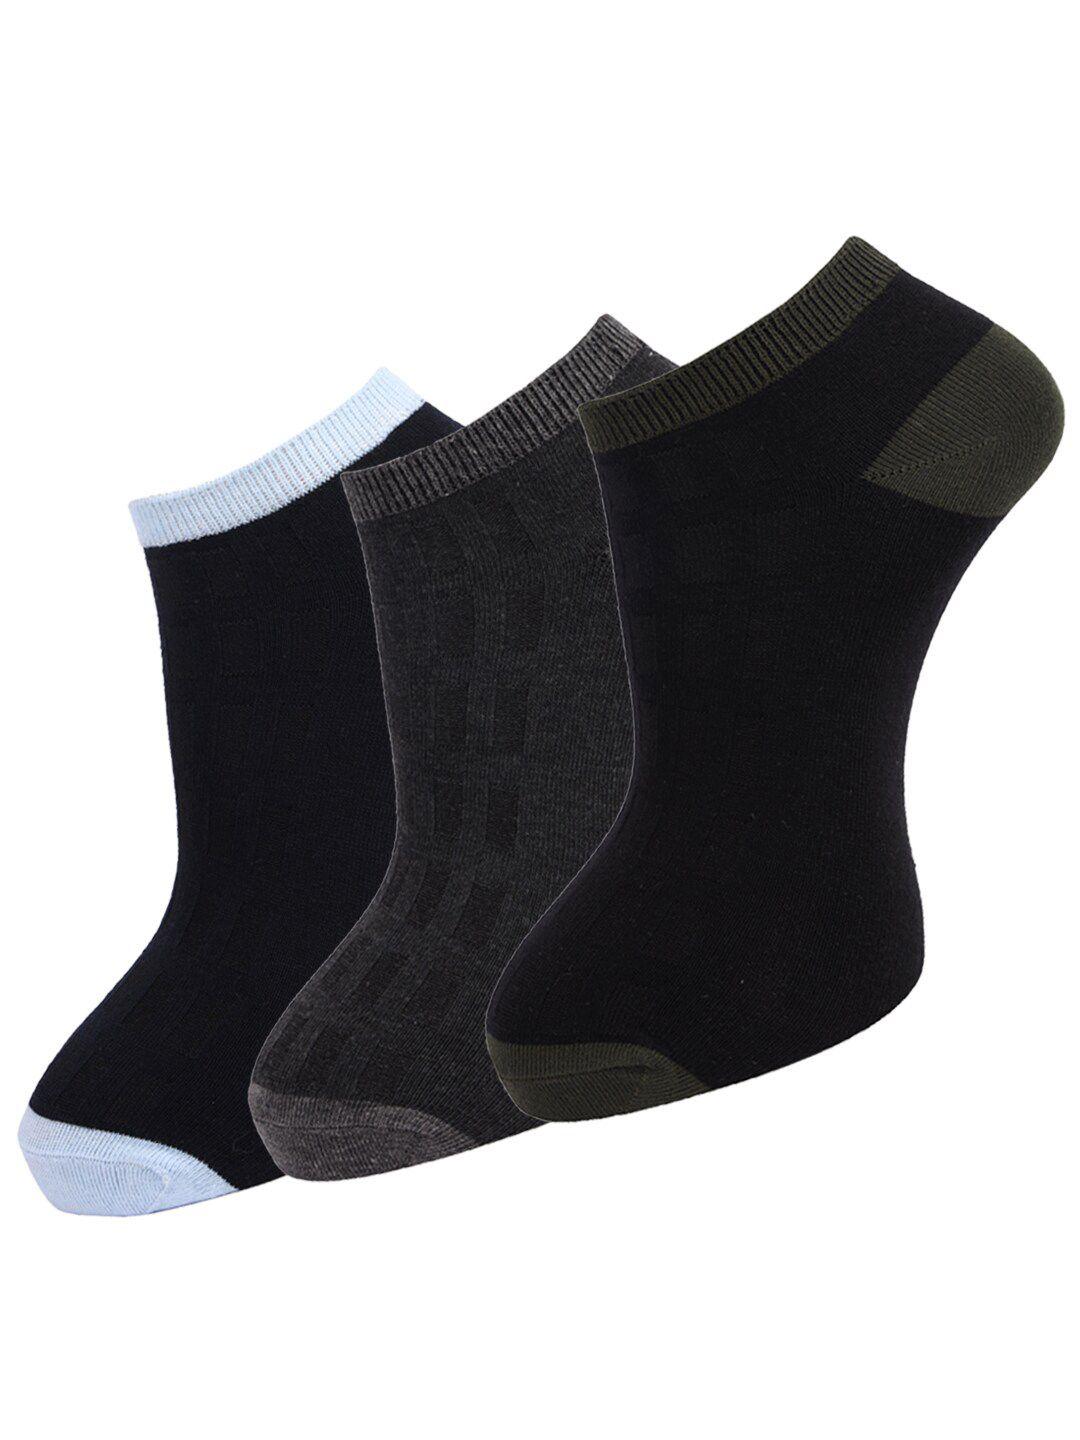 dollar-socks-men-pack-of-3-assorted-ankle-length-combed-cotton-socks